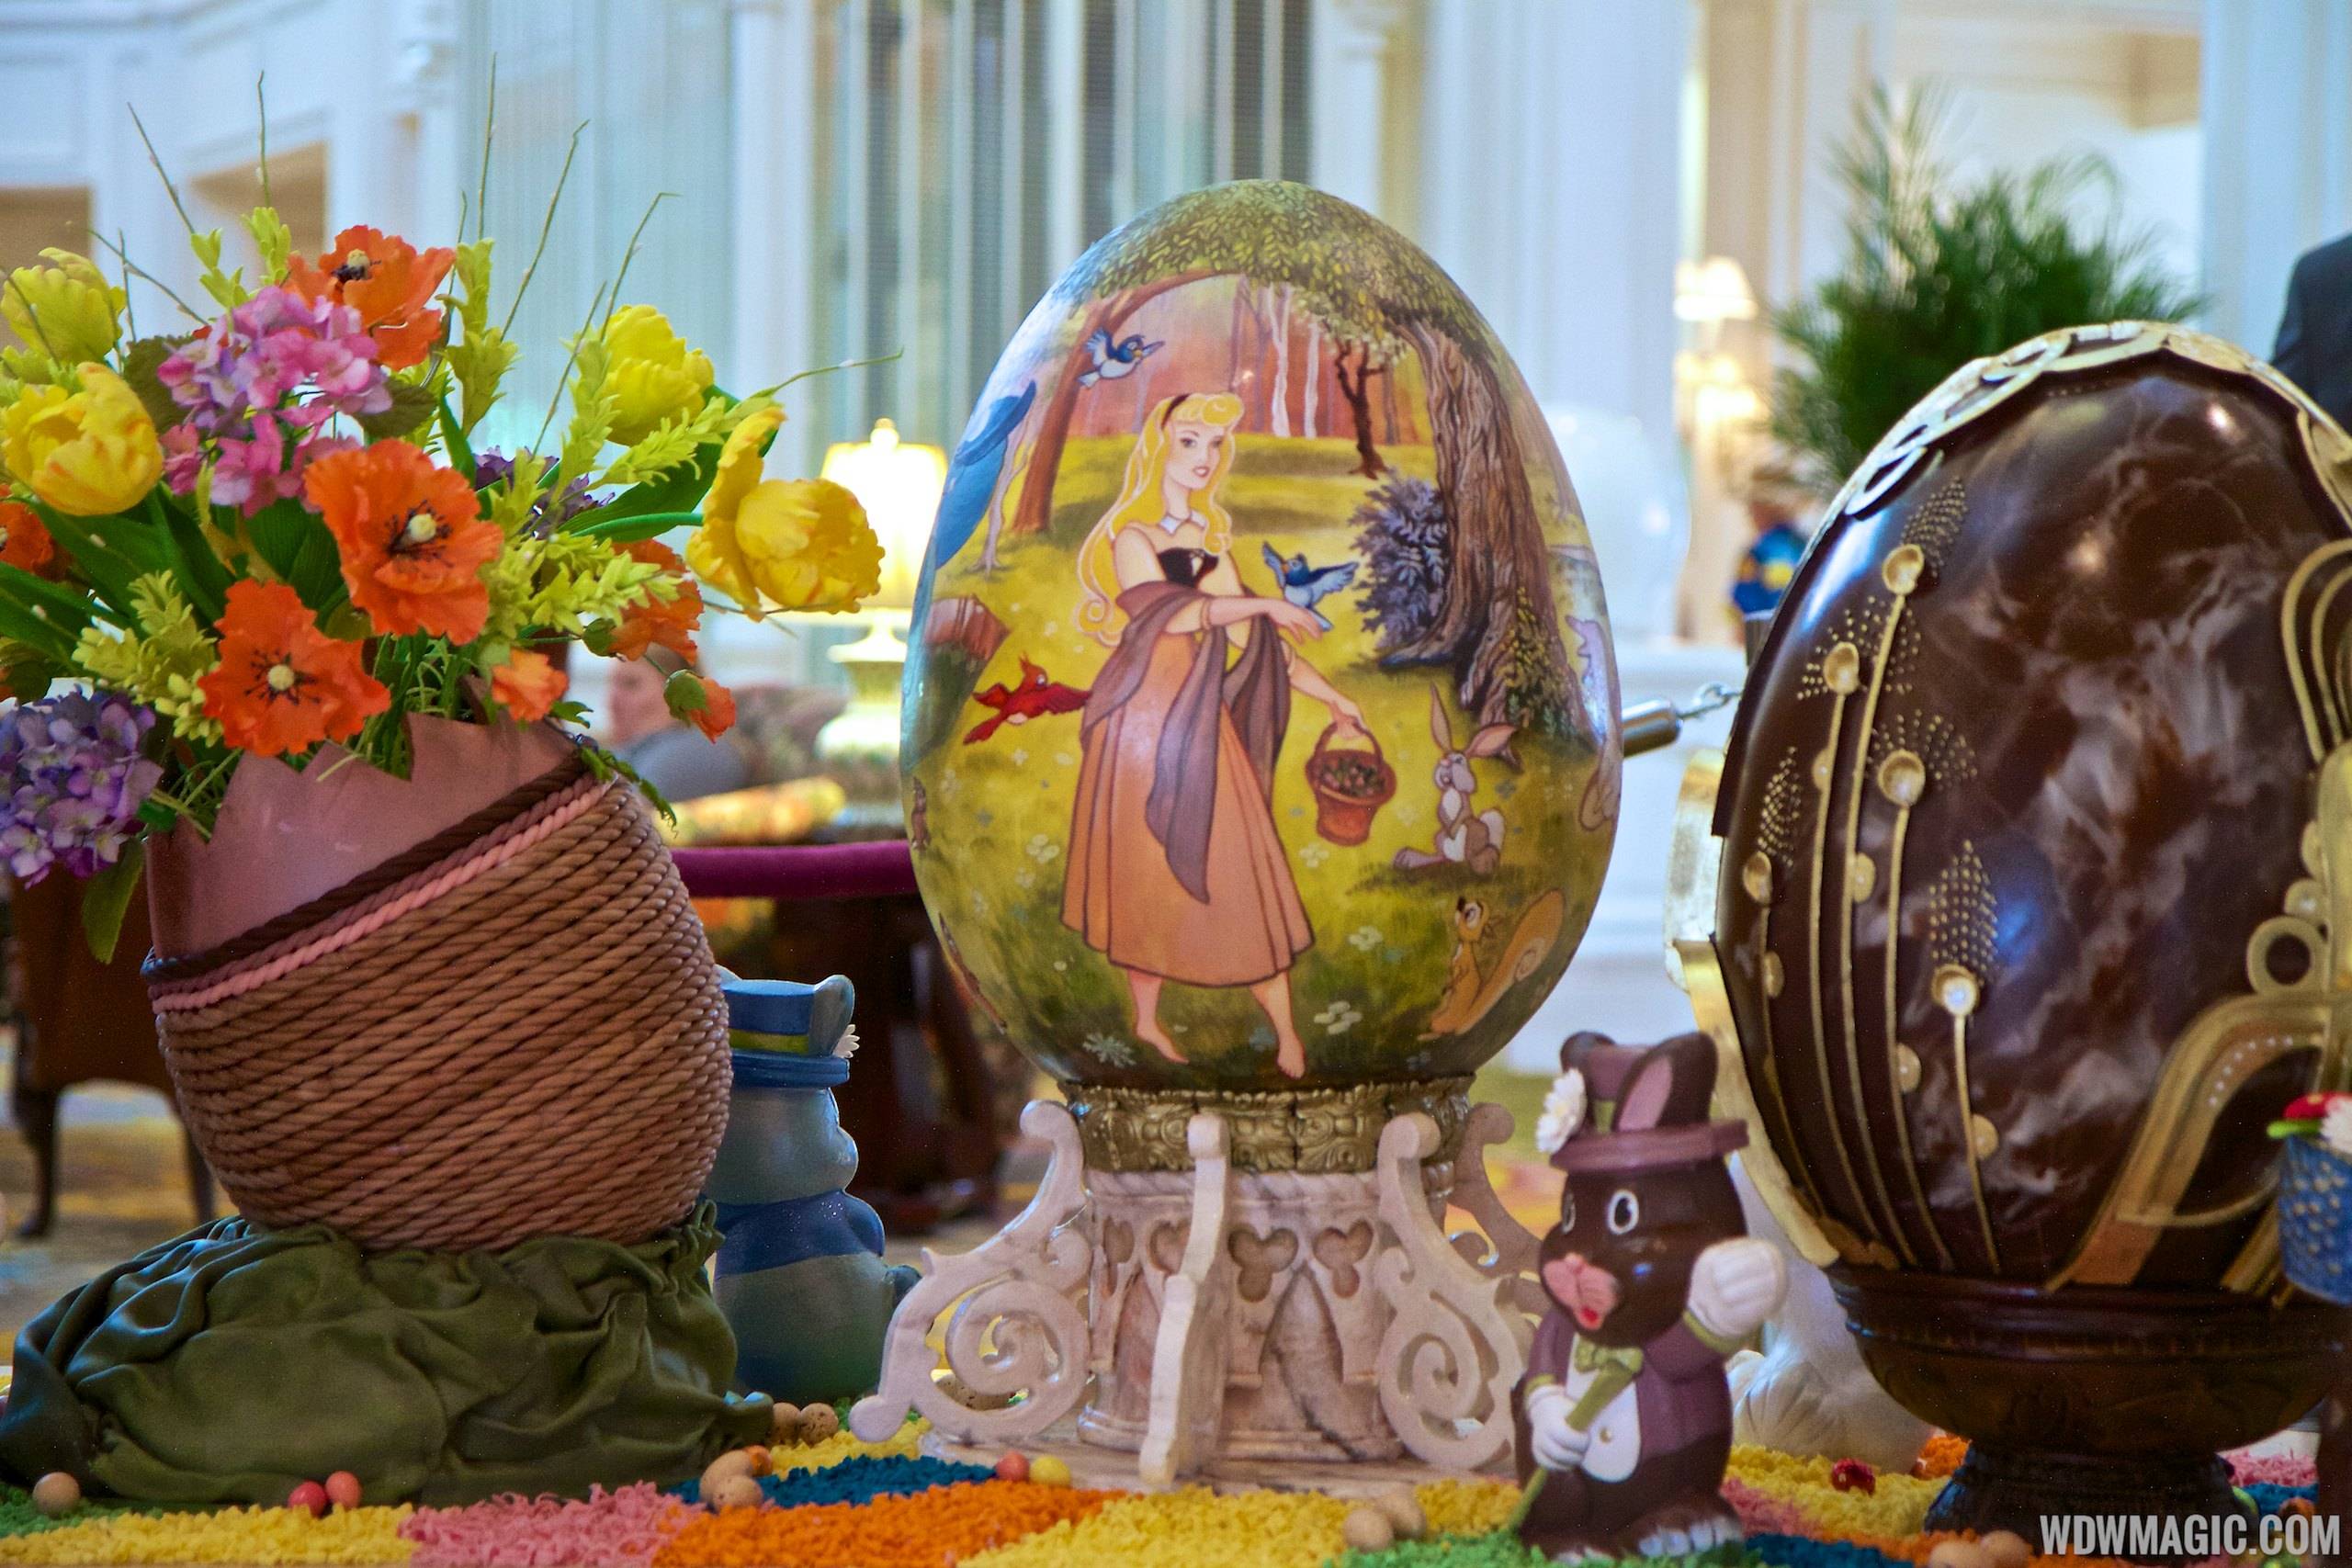 PHOTOS - The 2014 Grand Floridian Resort Easter Egg display